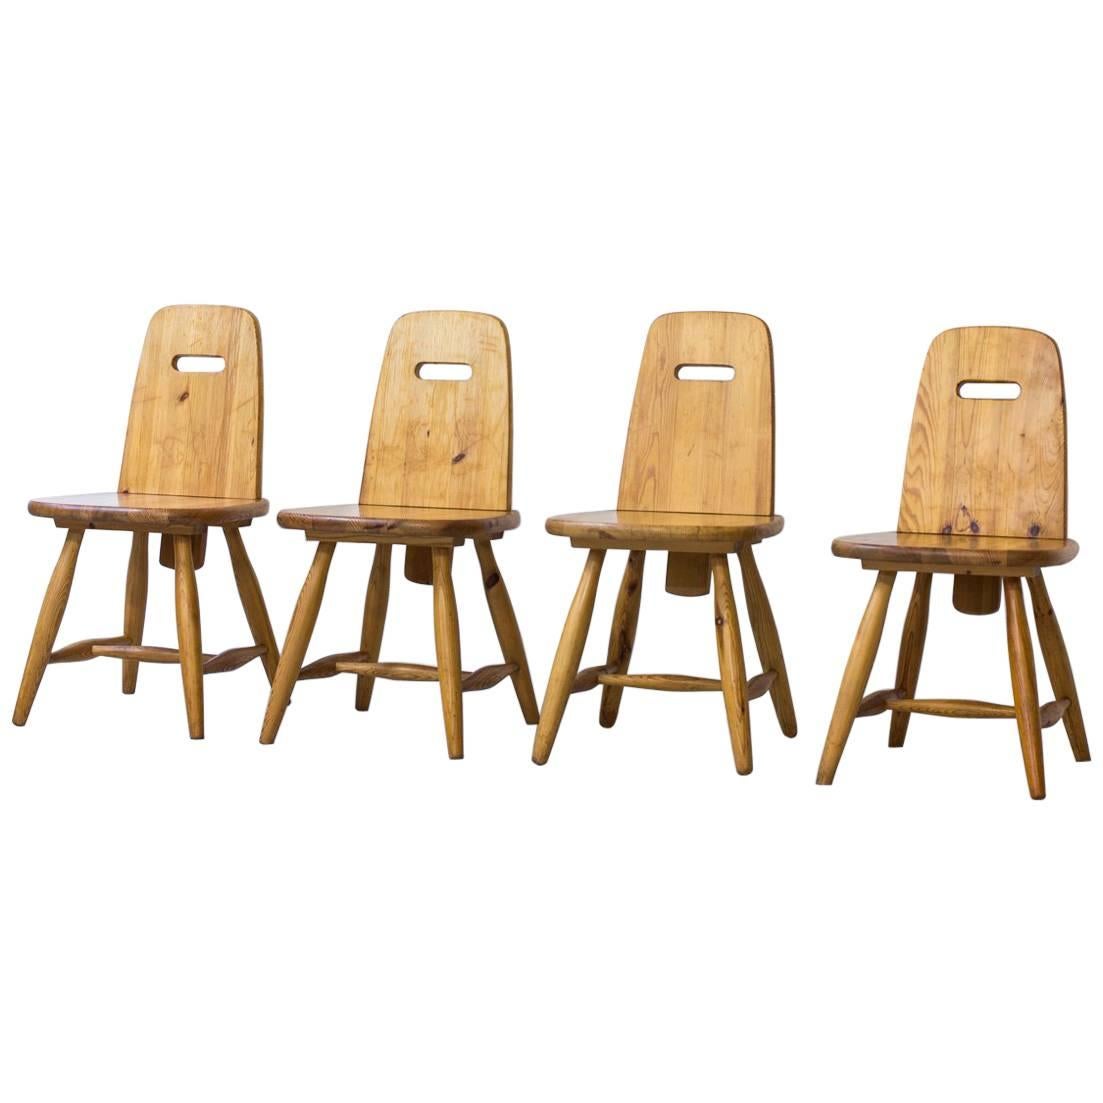 Set of Scandinavian Pine Chairs "Pirrti" by Eero Aarnio, Finland, 1960s